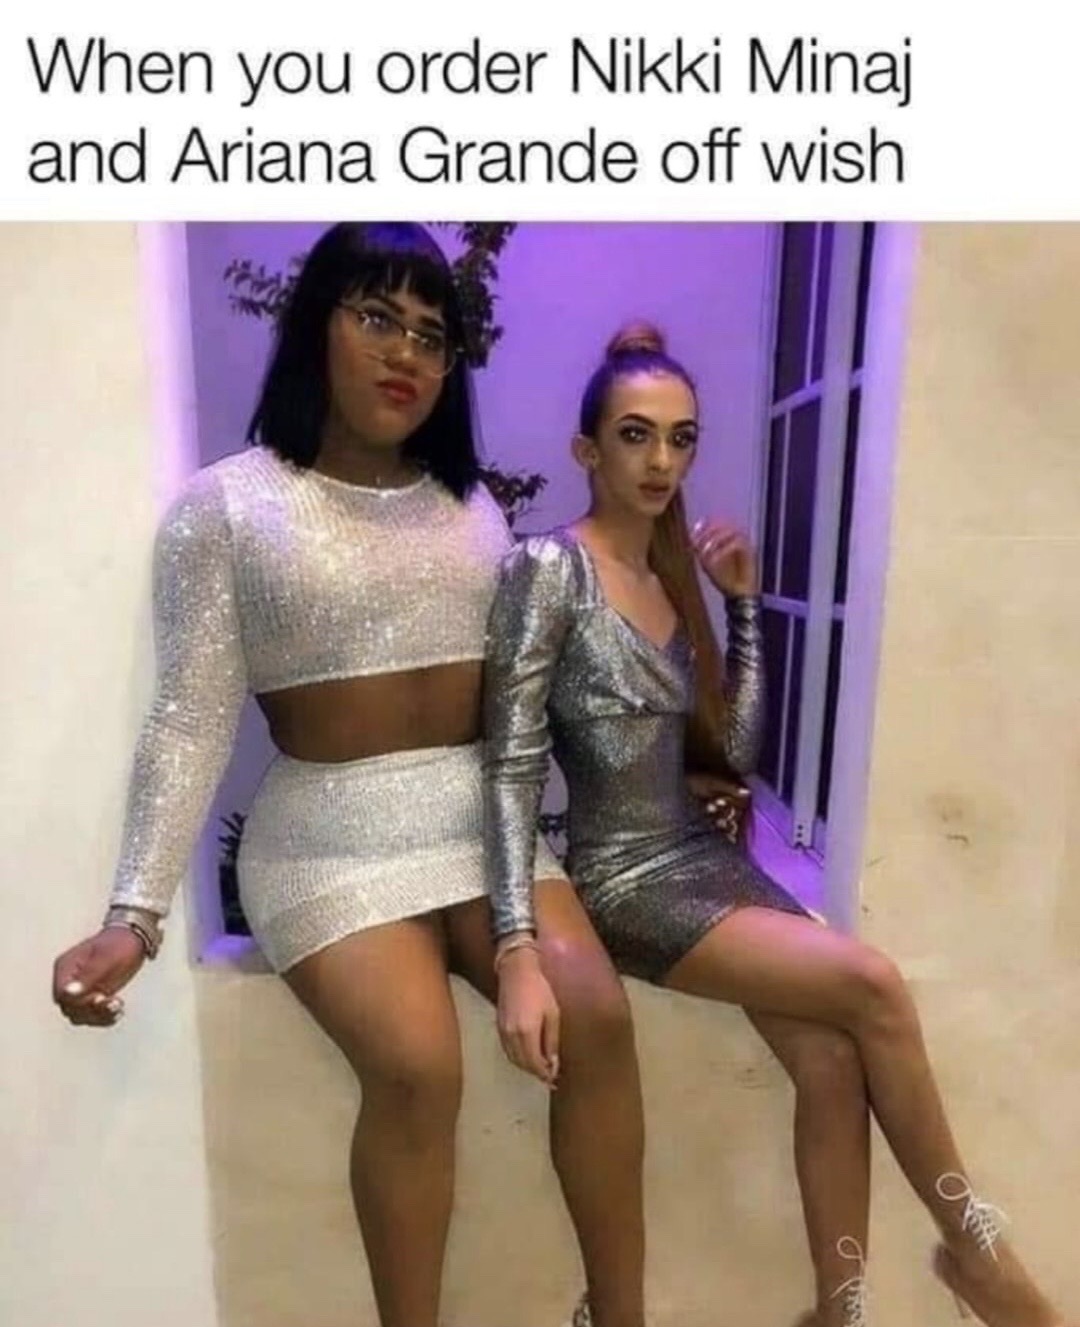 Humour - When you order Nikki Minaj and Ariana Grande off wish